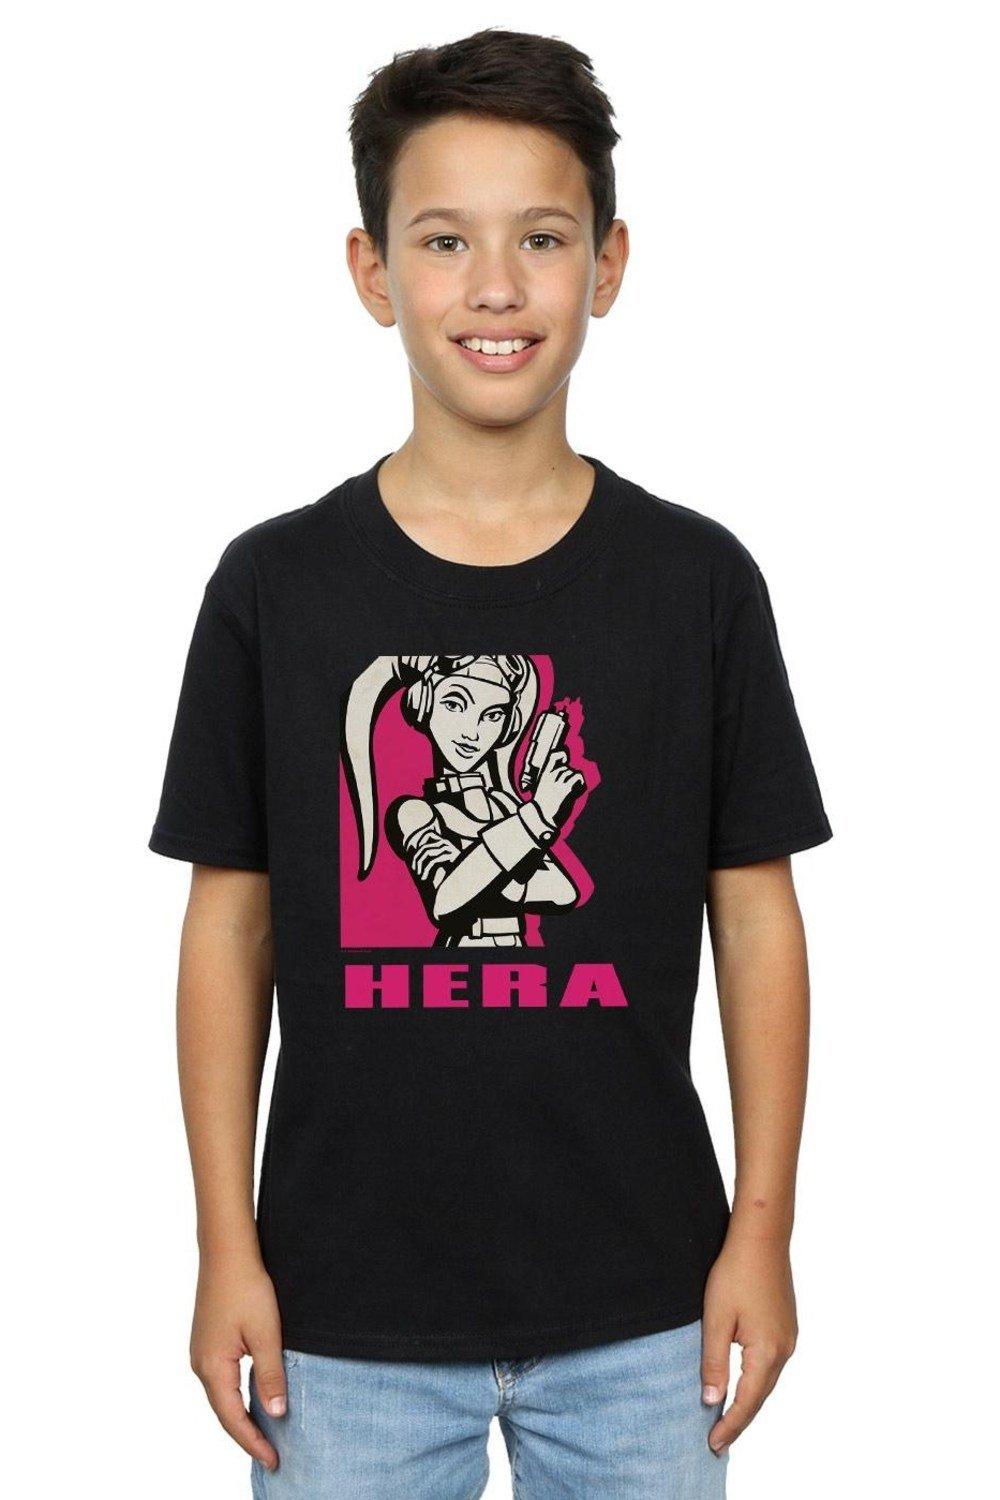 Rebels Hera T-Shirt